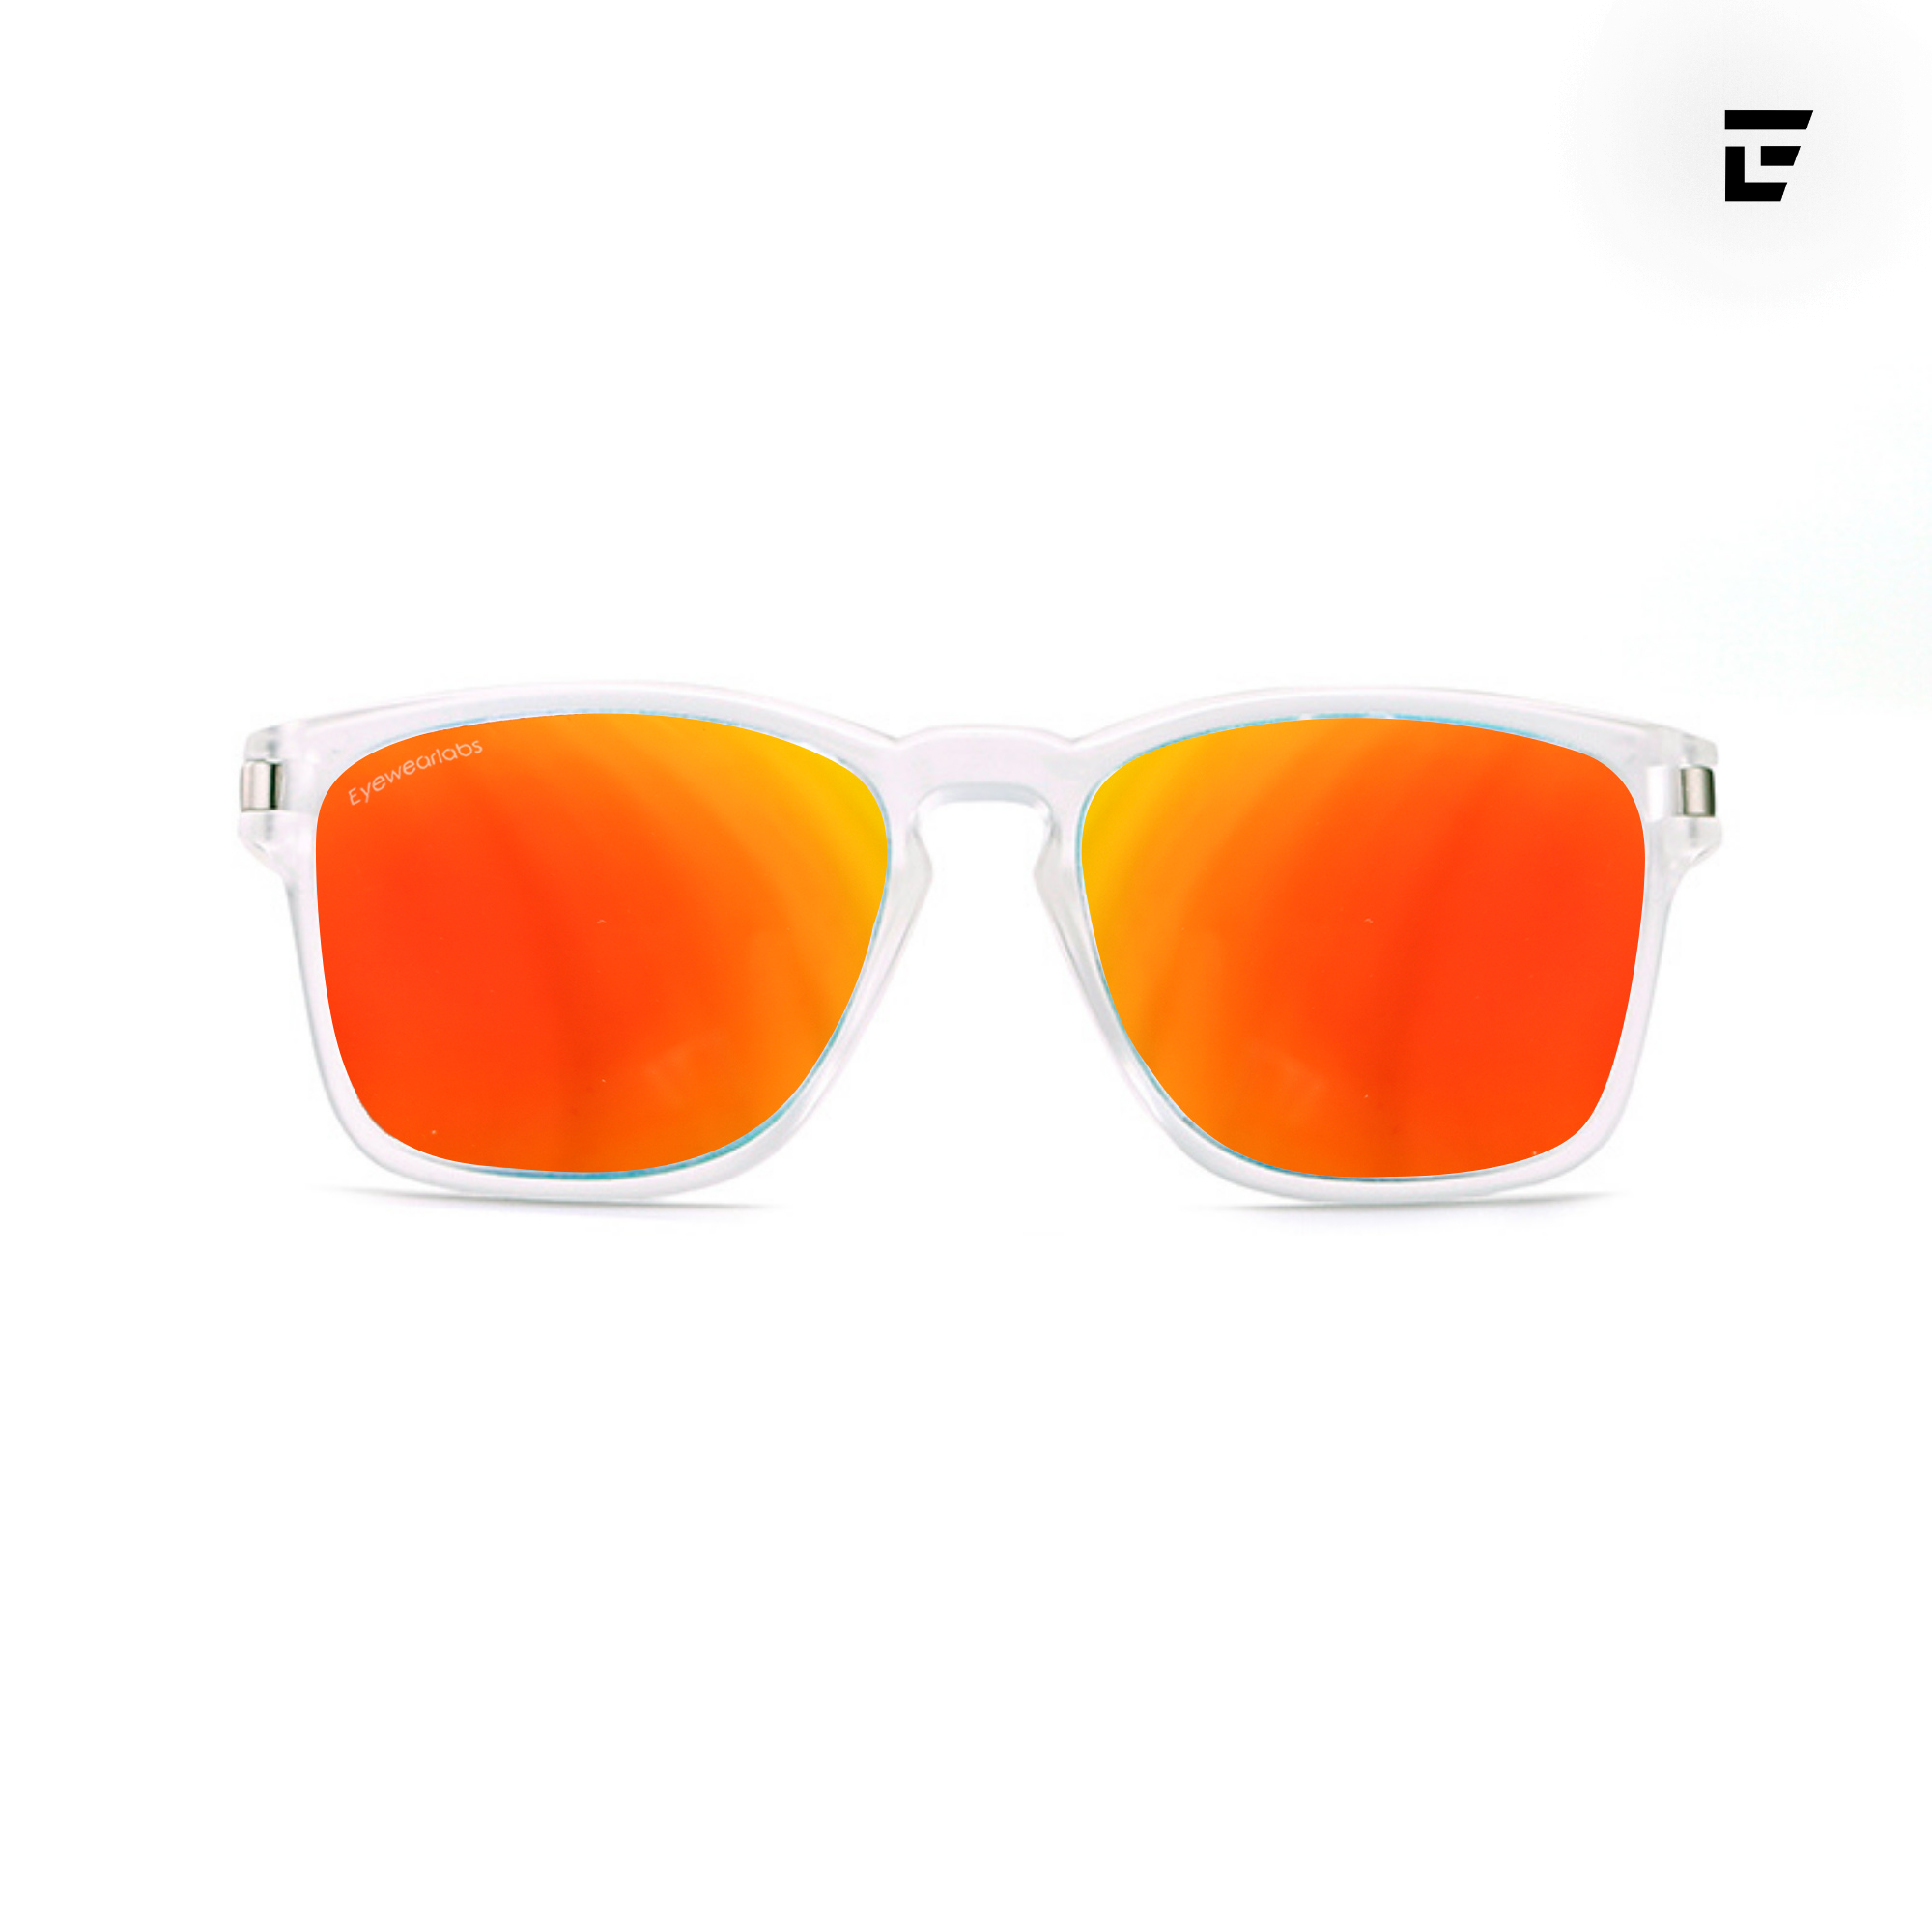 Eyewearlabs Sunglasses | Unboxing & Review | Flamboyant Orange Sunglasses  😎 | 22 Rider - YouTube